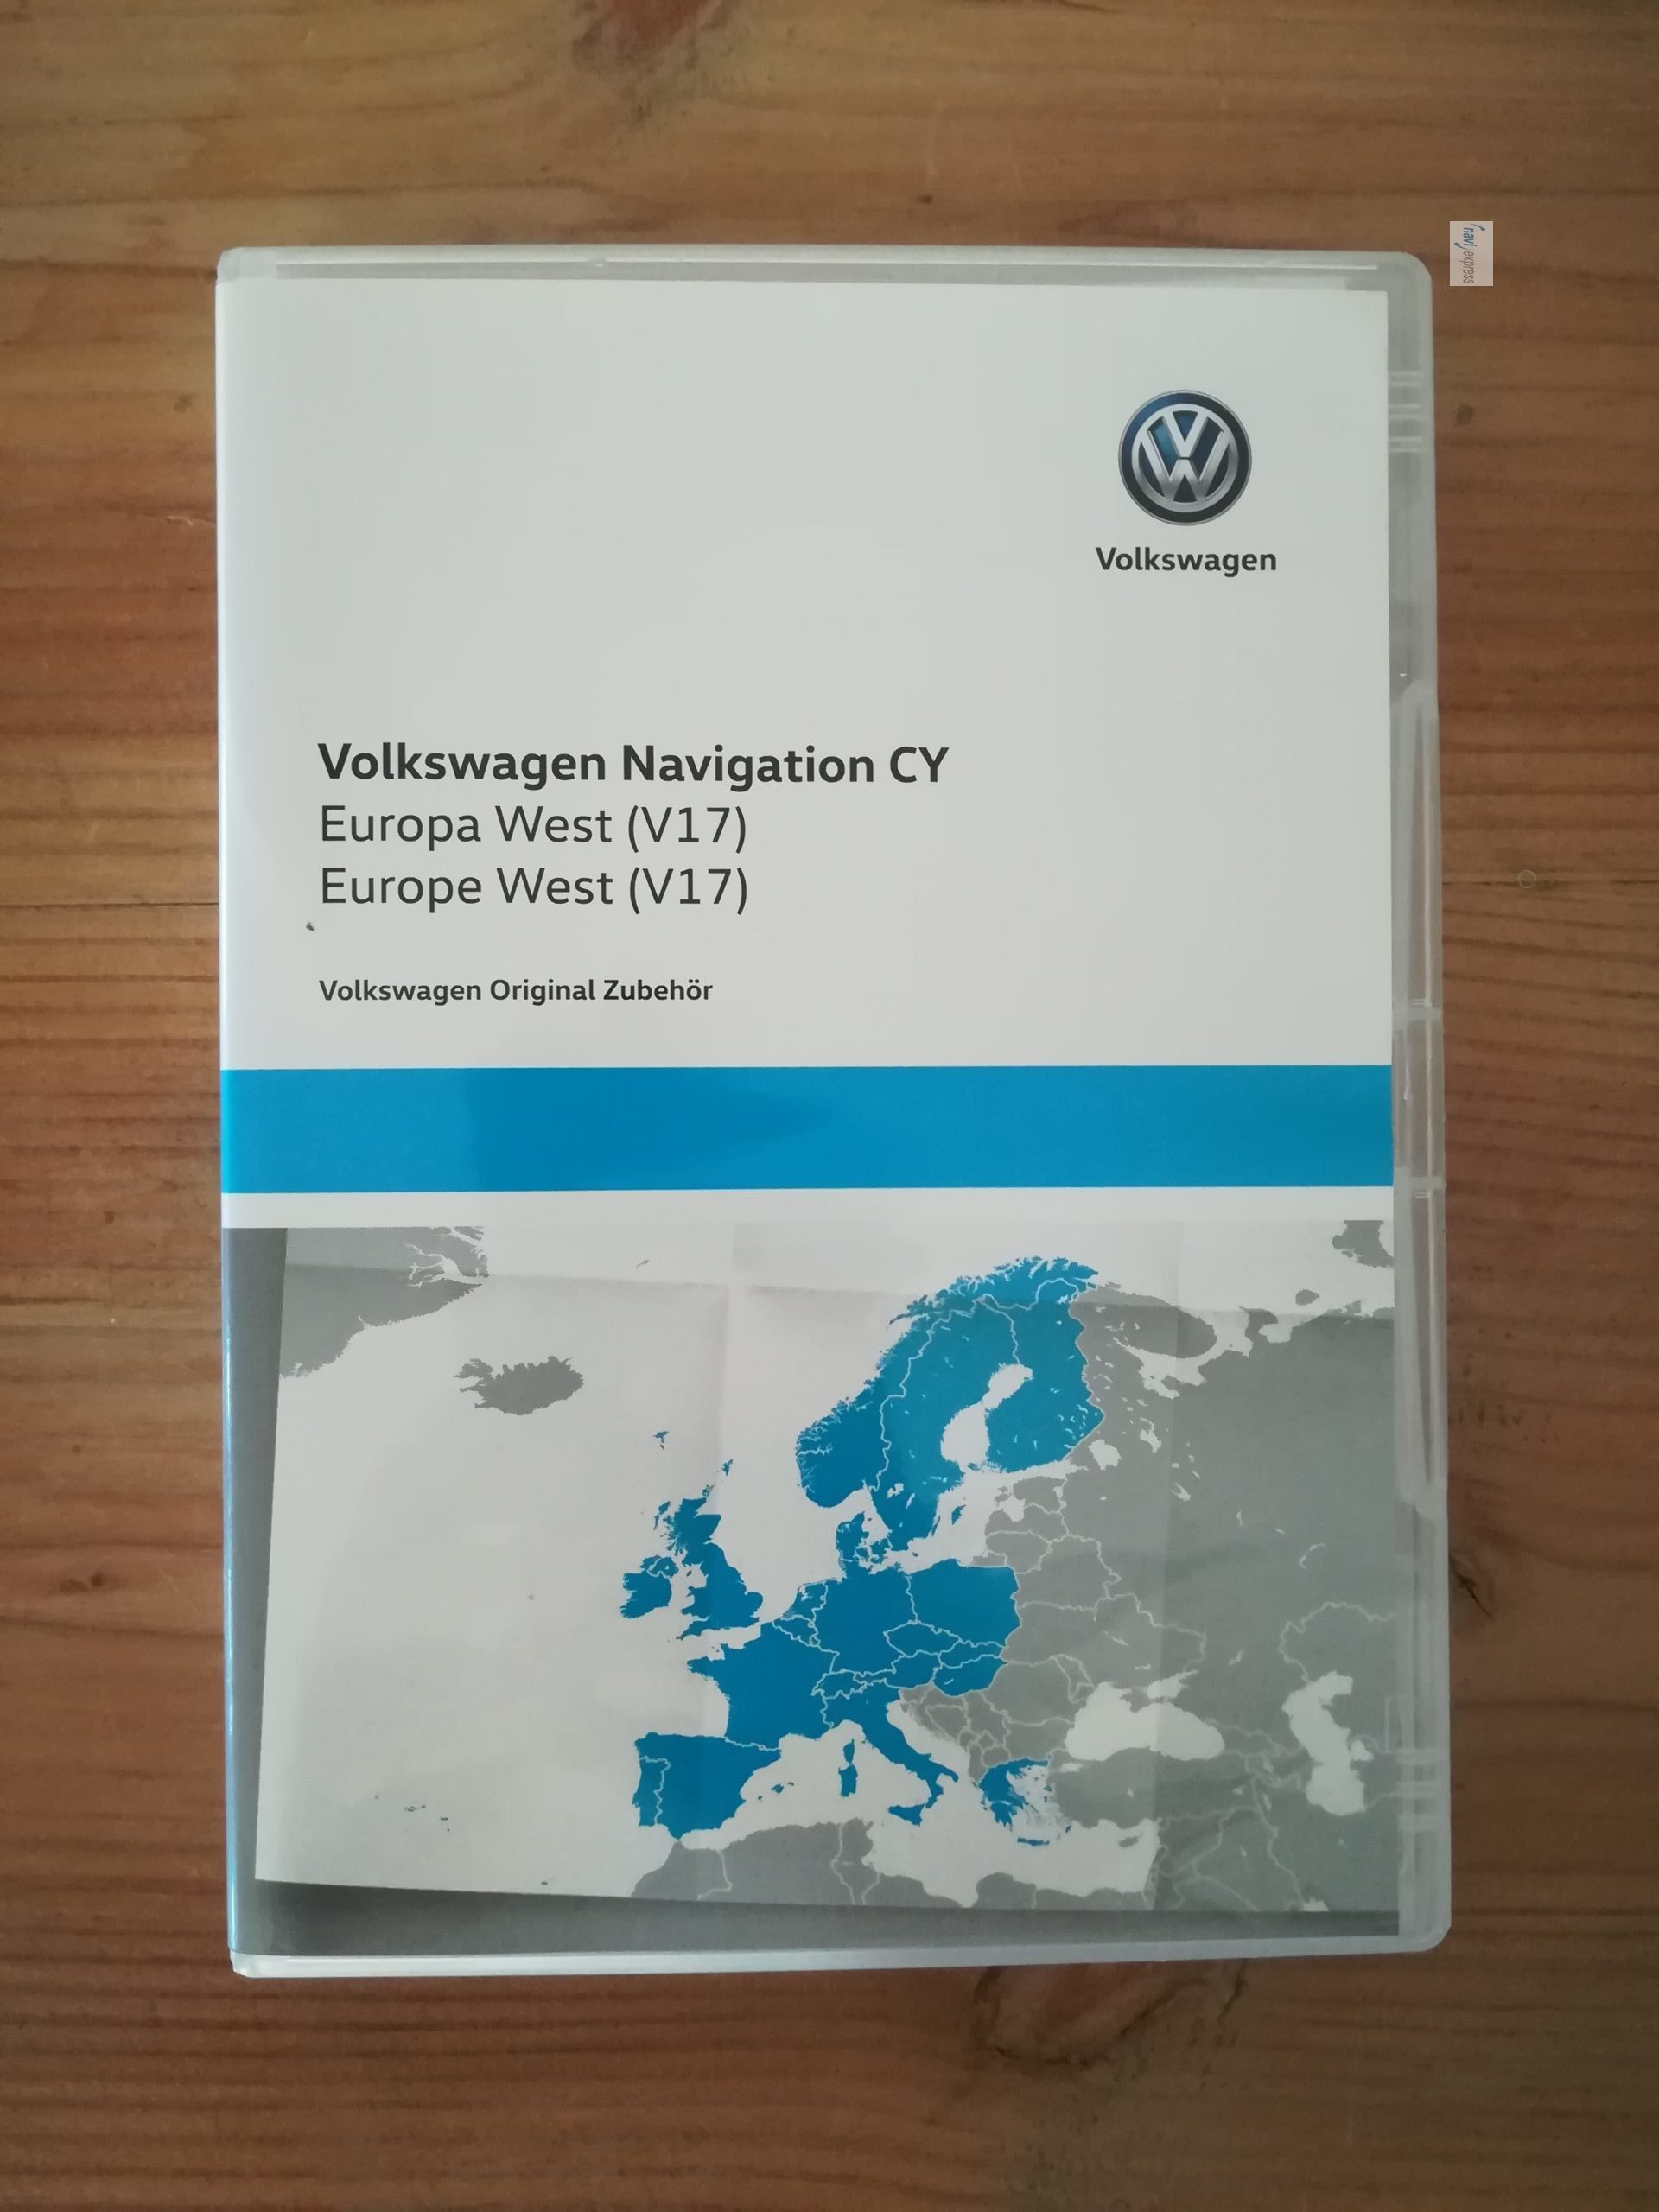 https://www.navi-express.com/wp-content/uploads/2021/04/VW-Navigation-CY-Europa-West-V17-1--scaled-e1619774941347.jpg